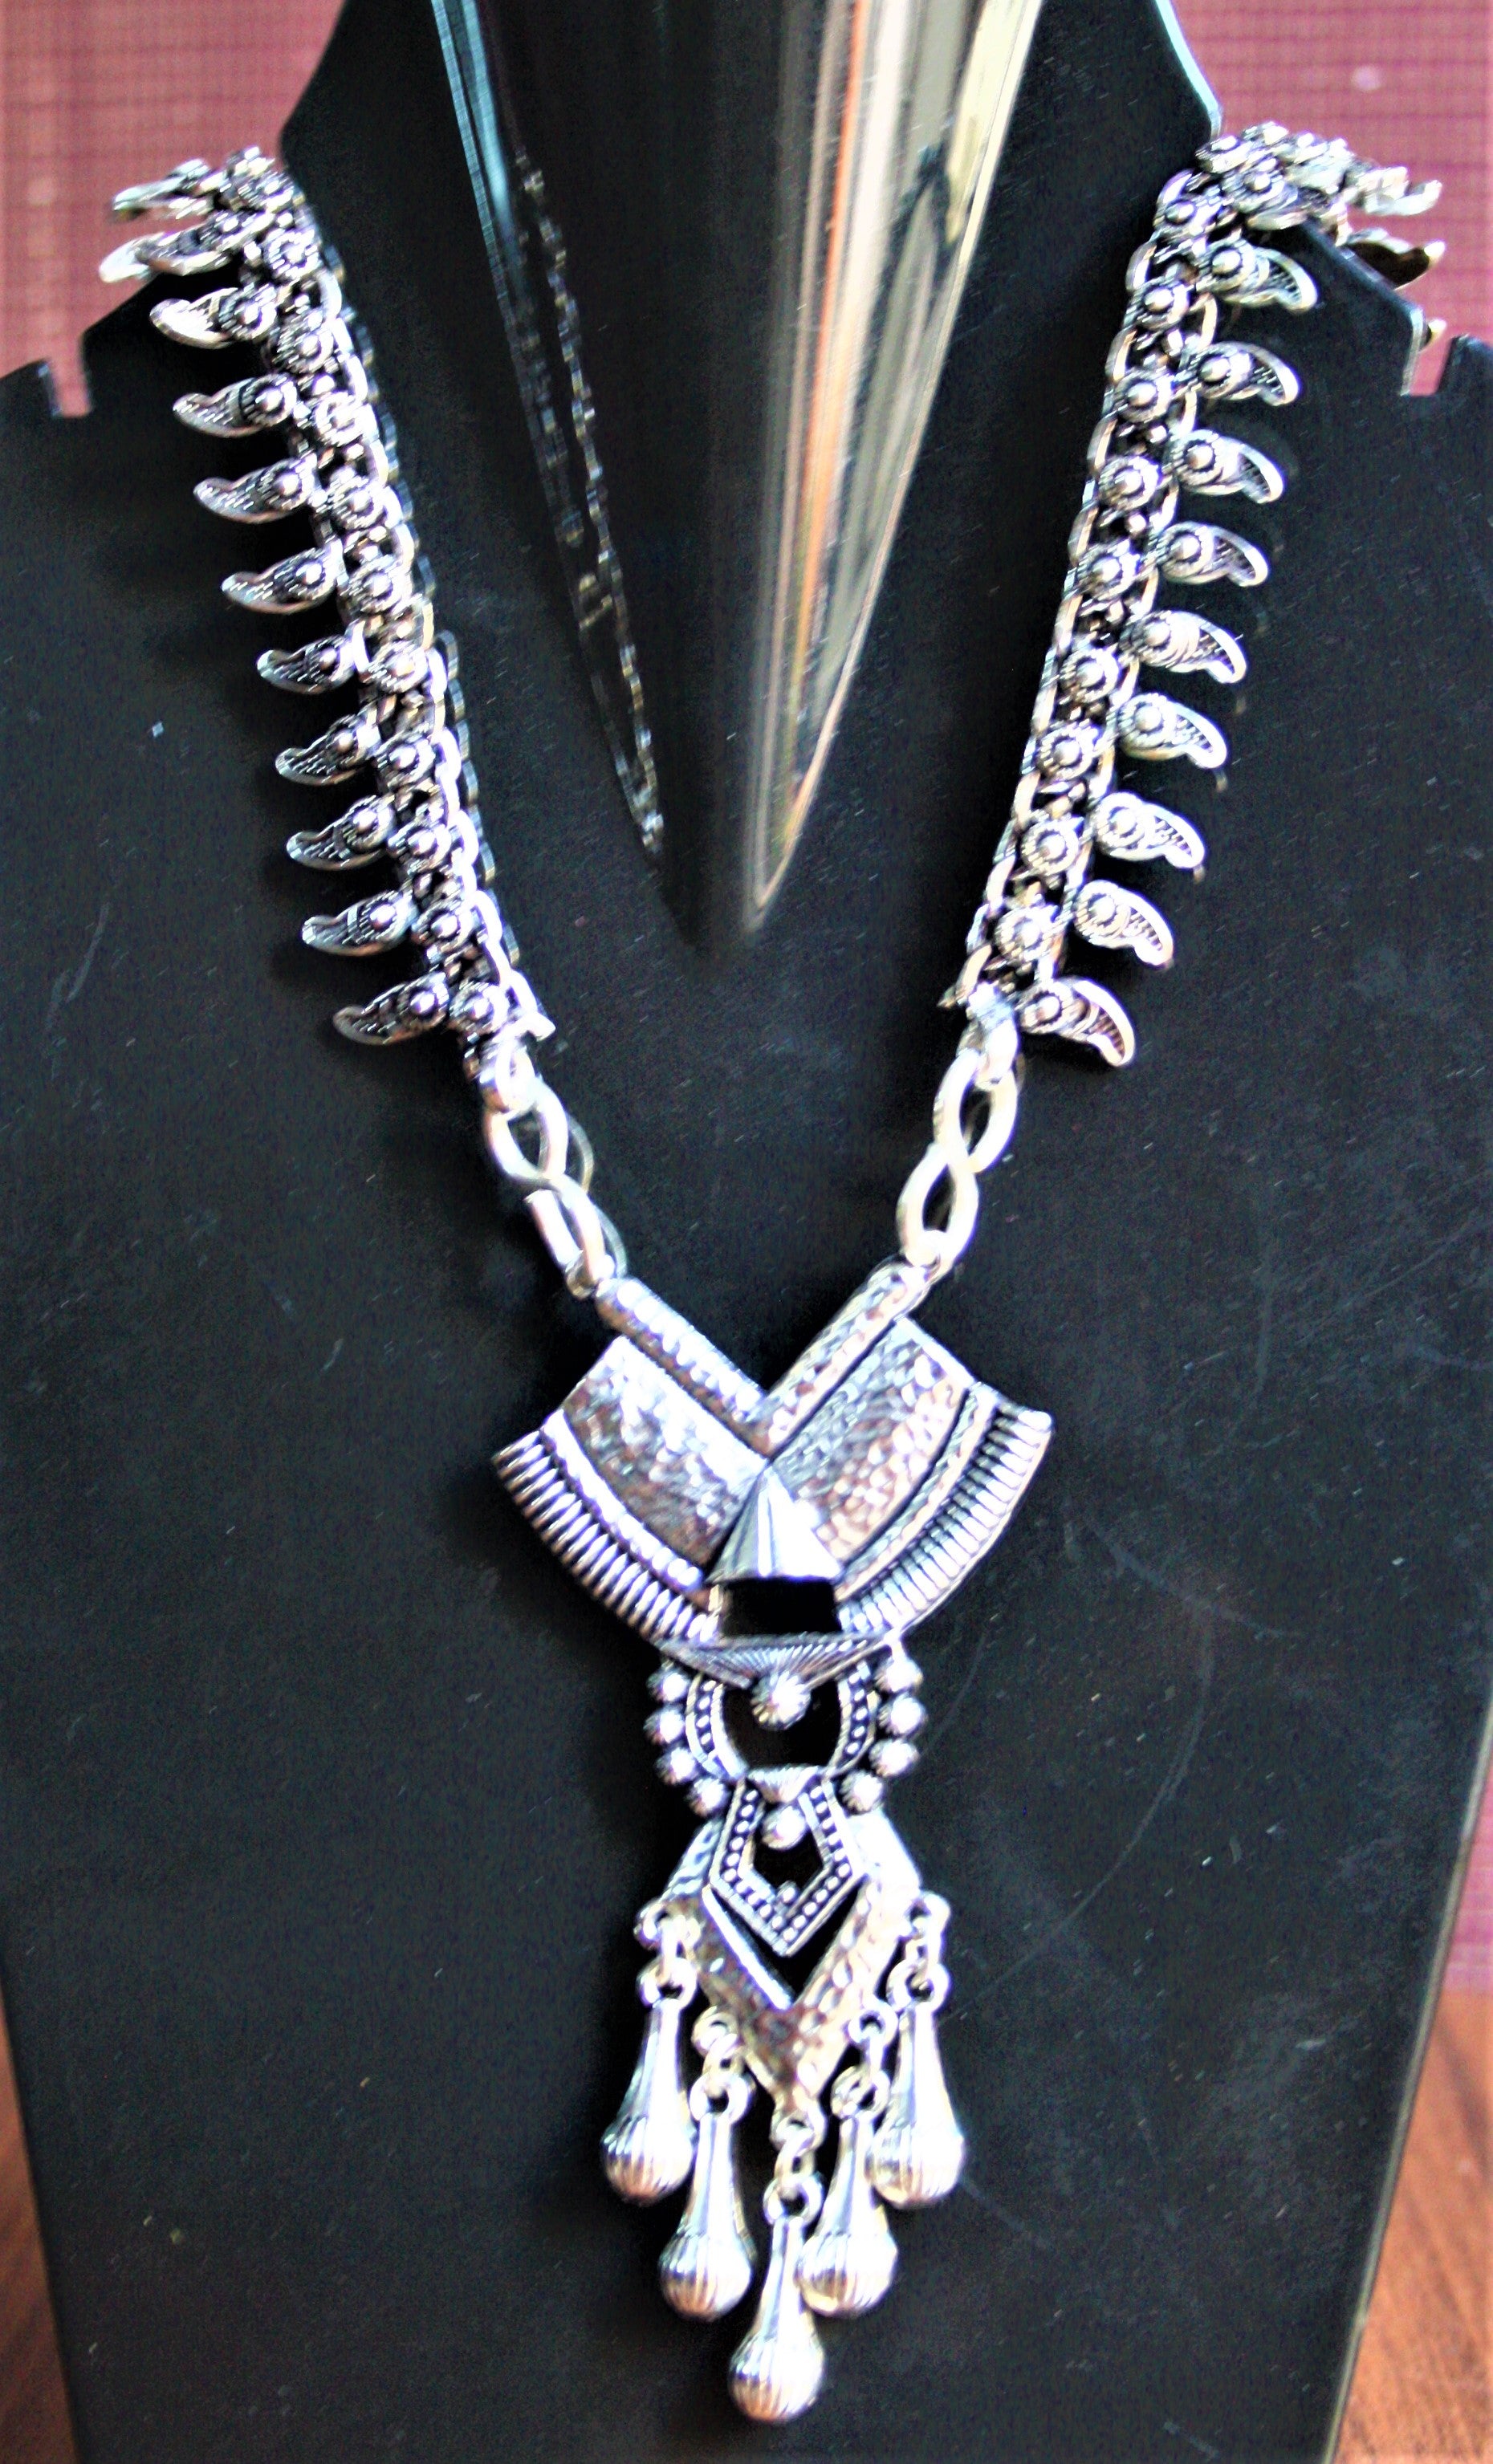 Silver Oxidized Necklace with Boho Pendant - GlitterGleam